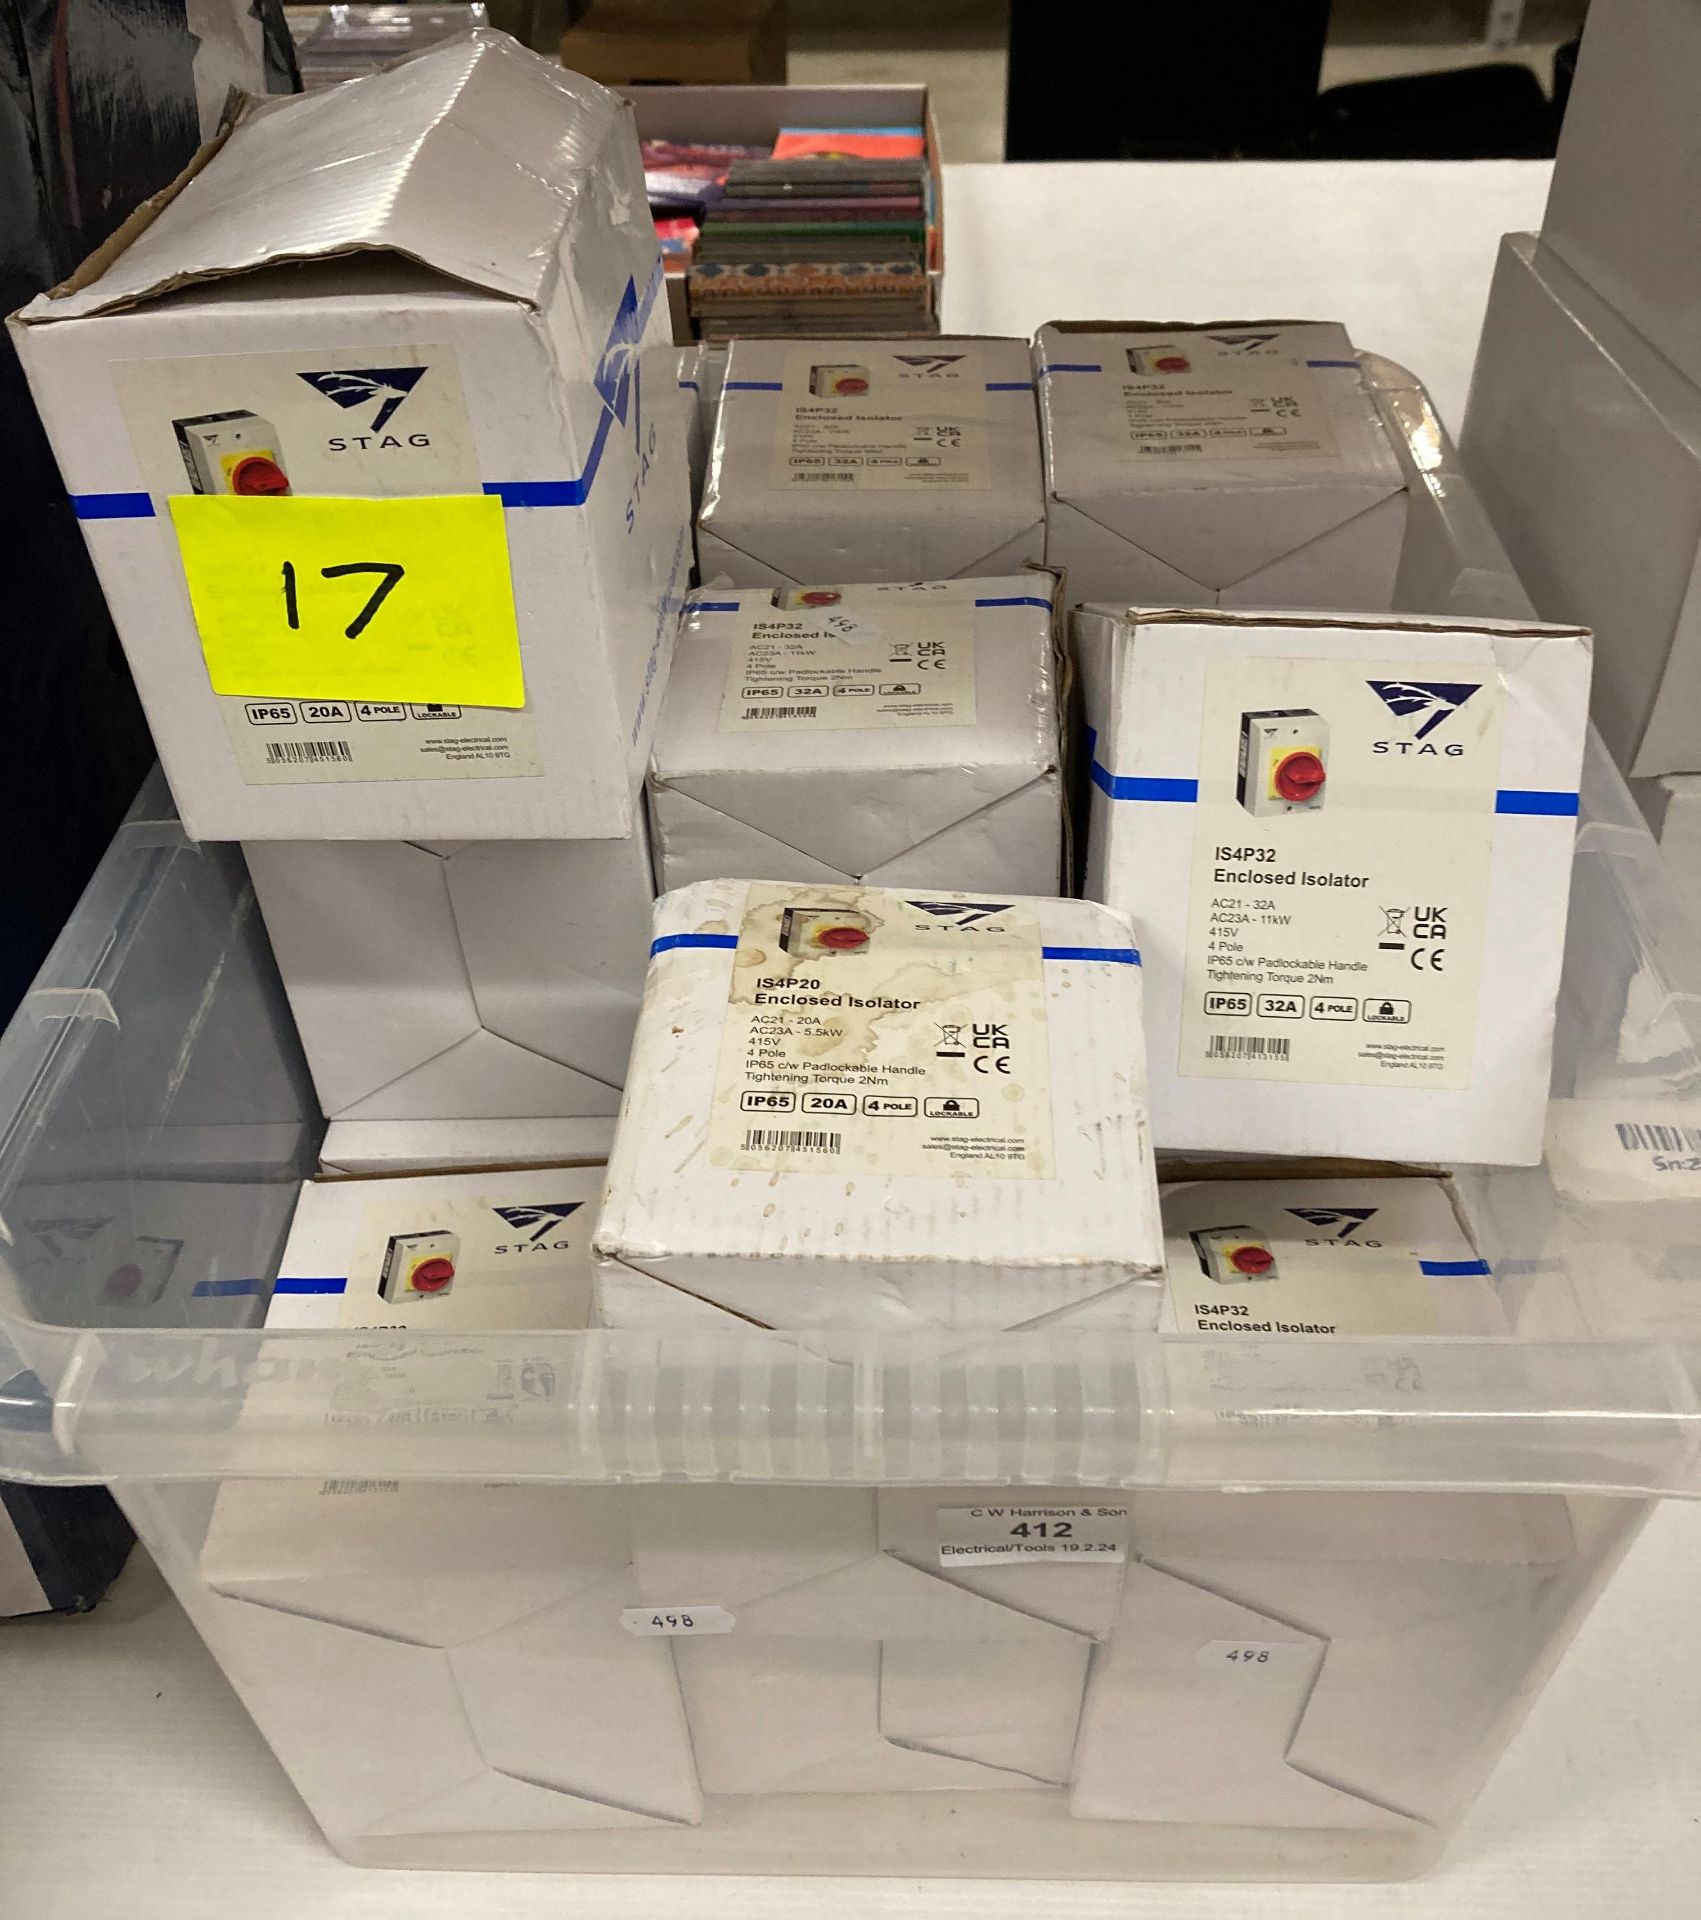 Contents to plastic box - 17 boxed Stag enclosed isolators ref: 154P32 and 154P20 (saleroom